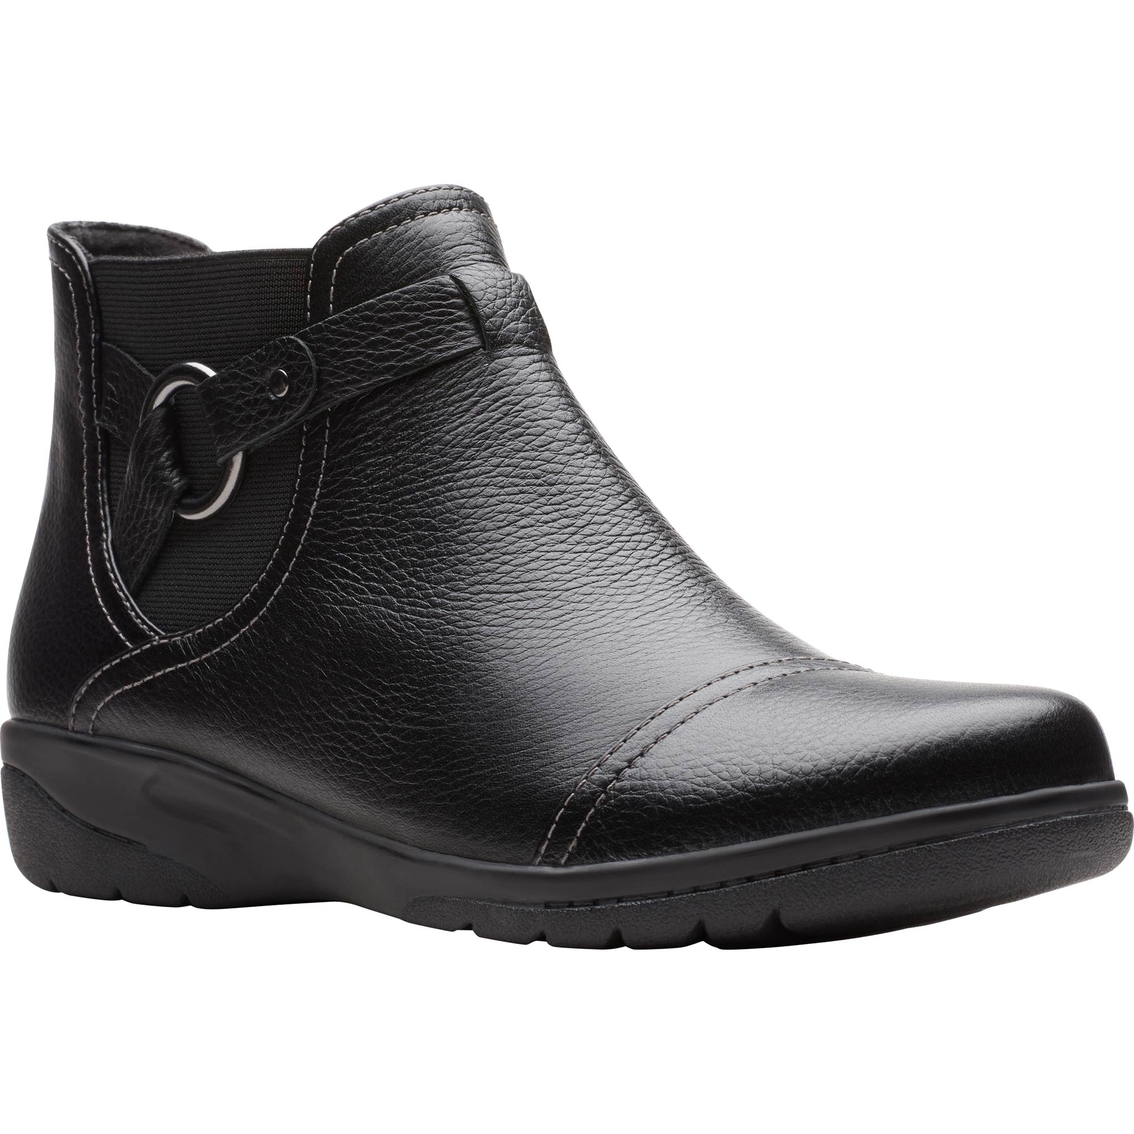 Clarks Cheyn Track Leather Side Zip Booties | Booties | Shoes | Shop ...